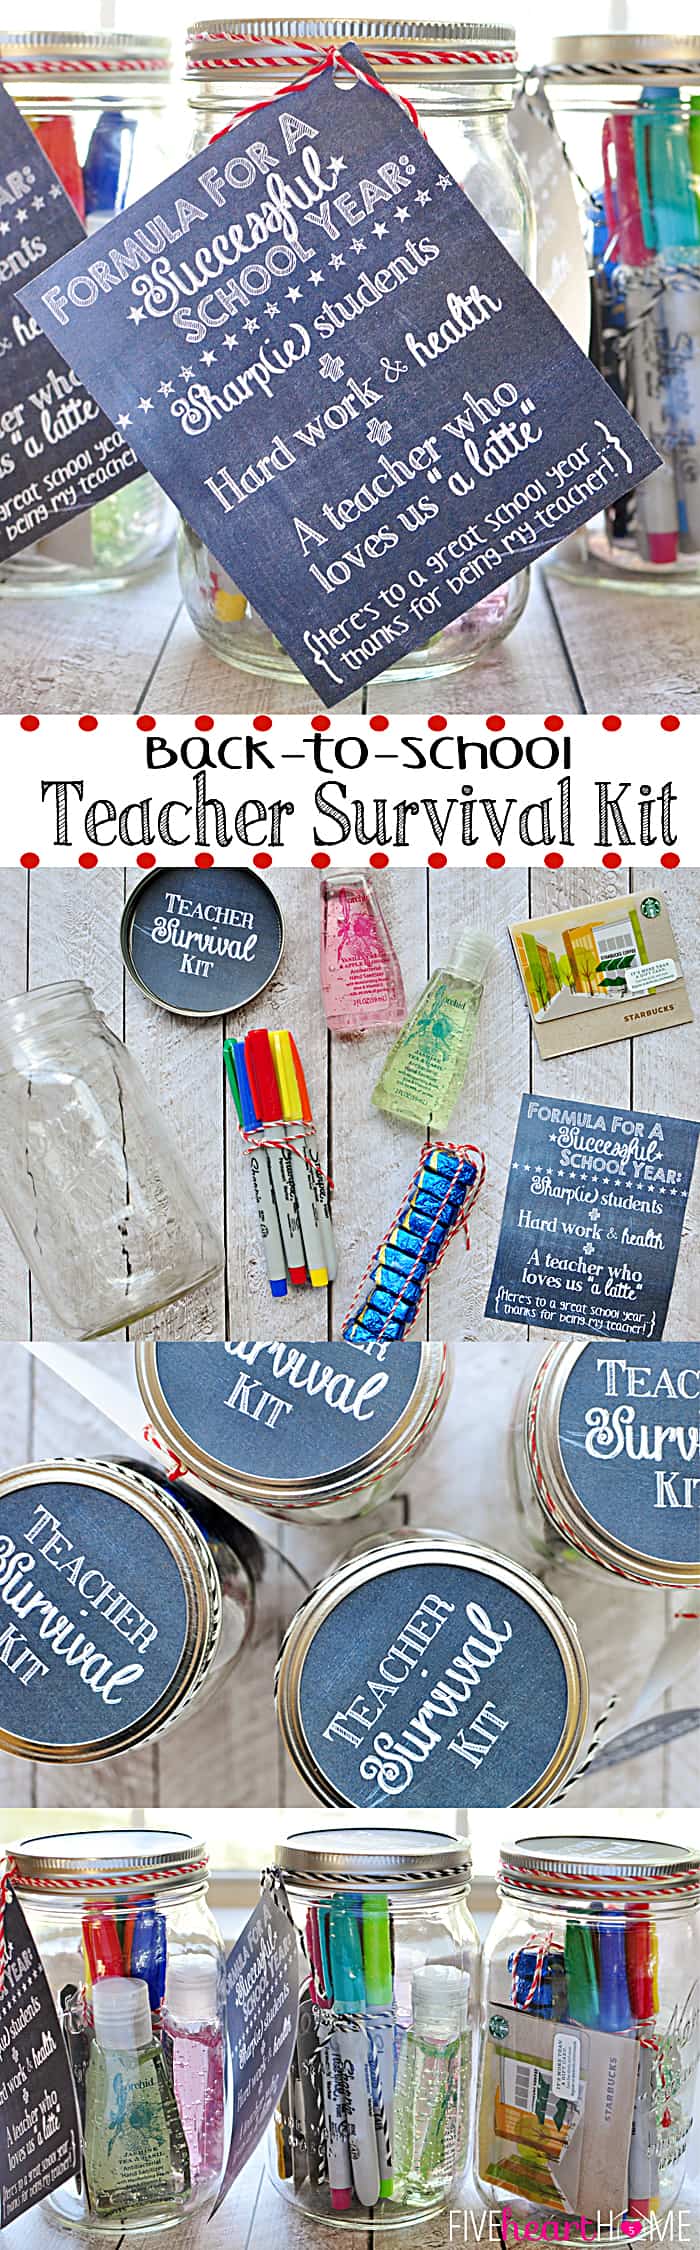 Back To School Teacher Survival Kit Mason Jar Gift Free Printables Fivehearthome